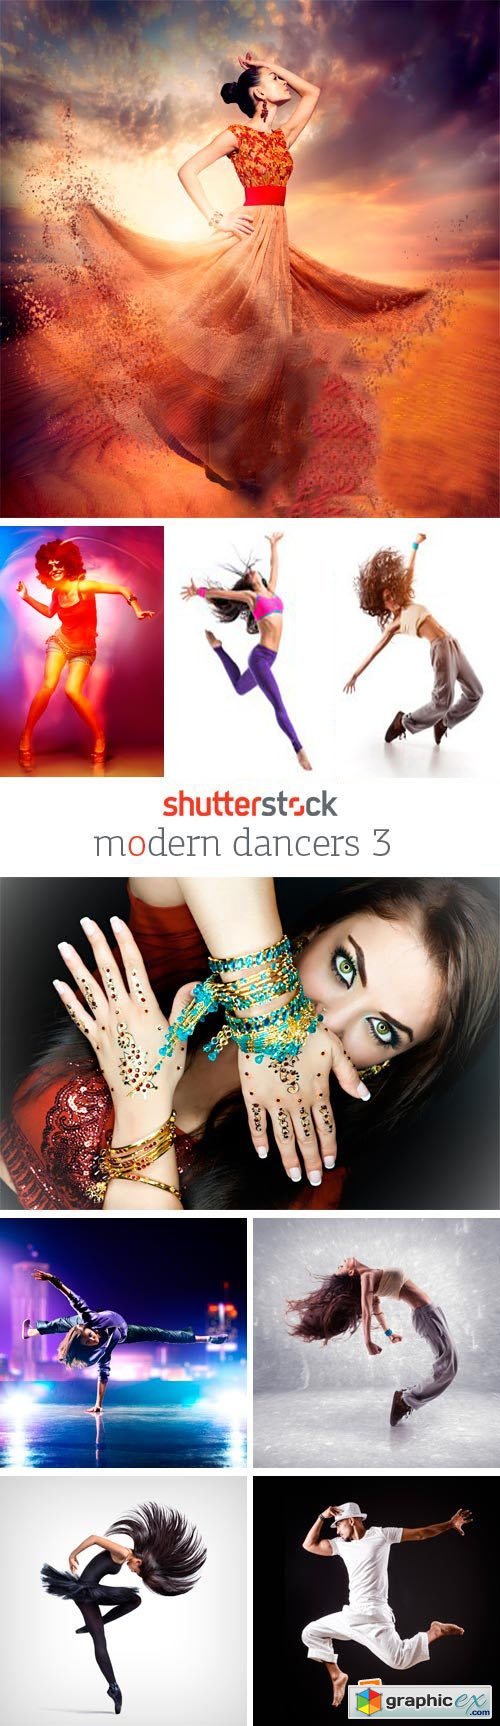 Amazing SS - Modern Dancers 3, 25xJPG